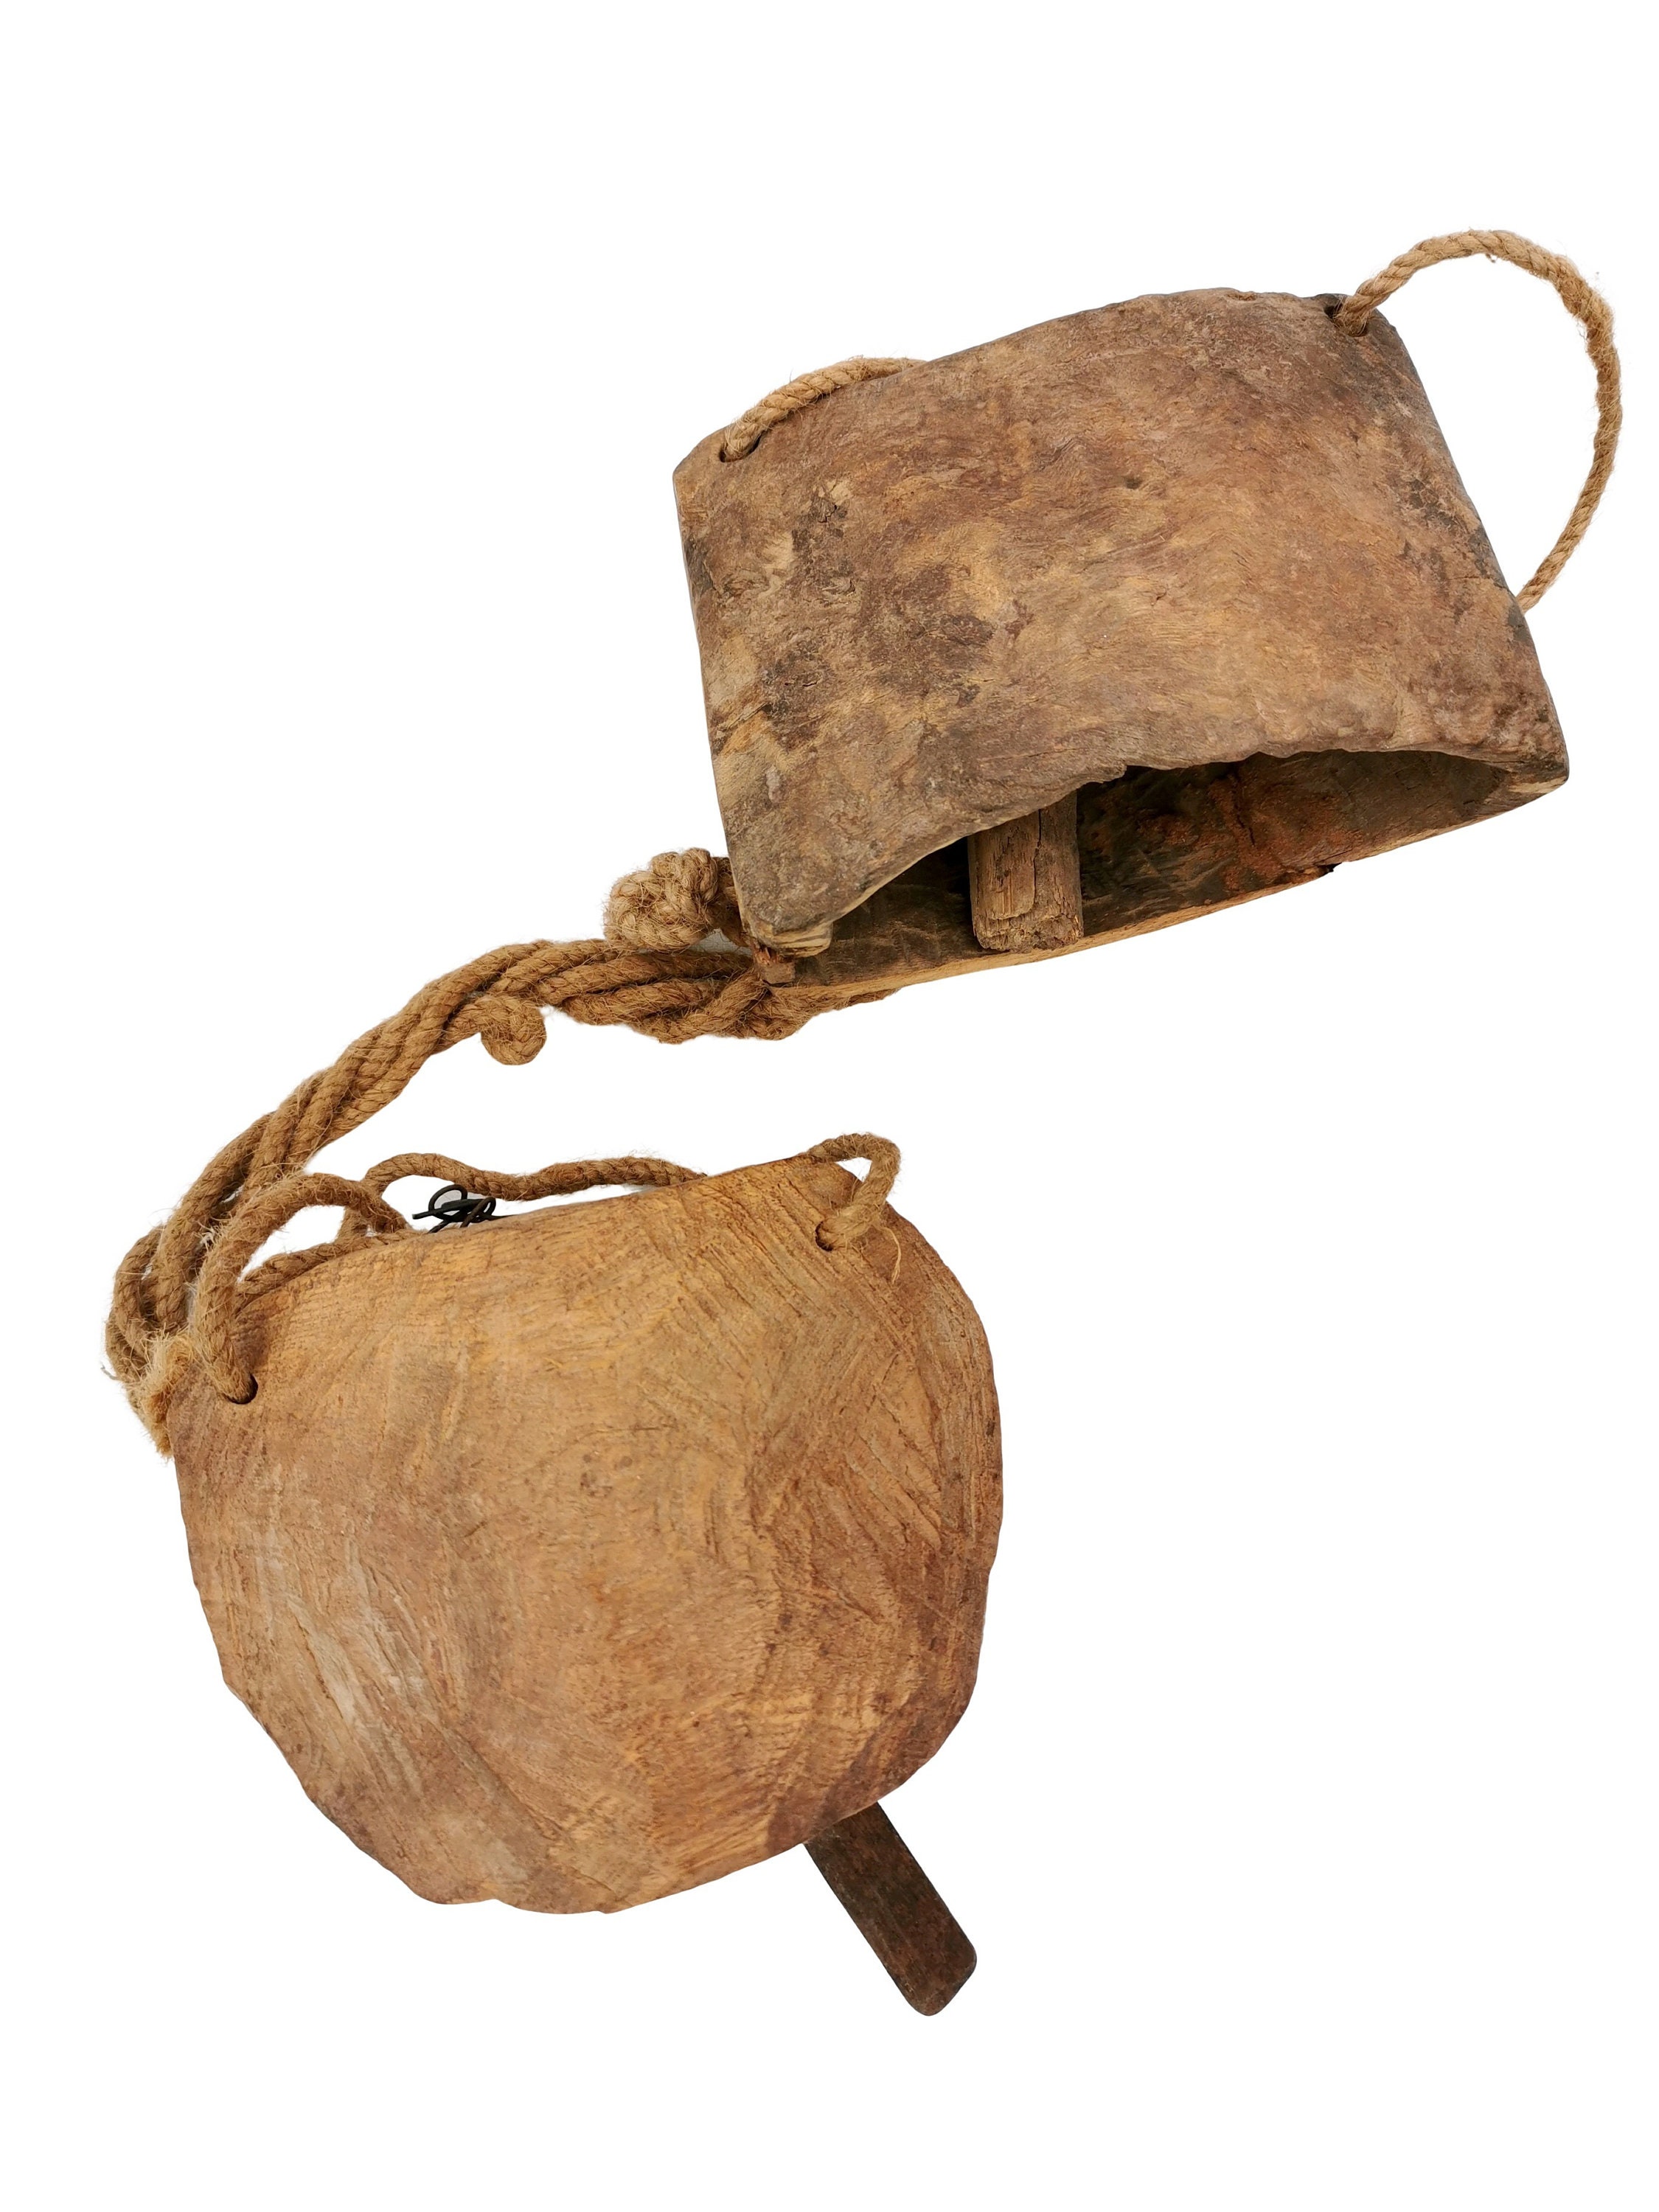 Antique cow bells - Lot of 9 pieces - Wooden cow bells and metal cow bells